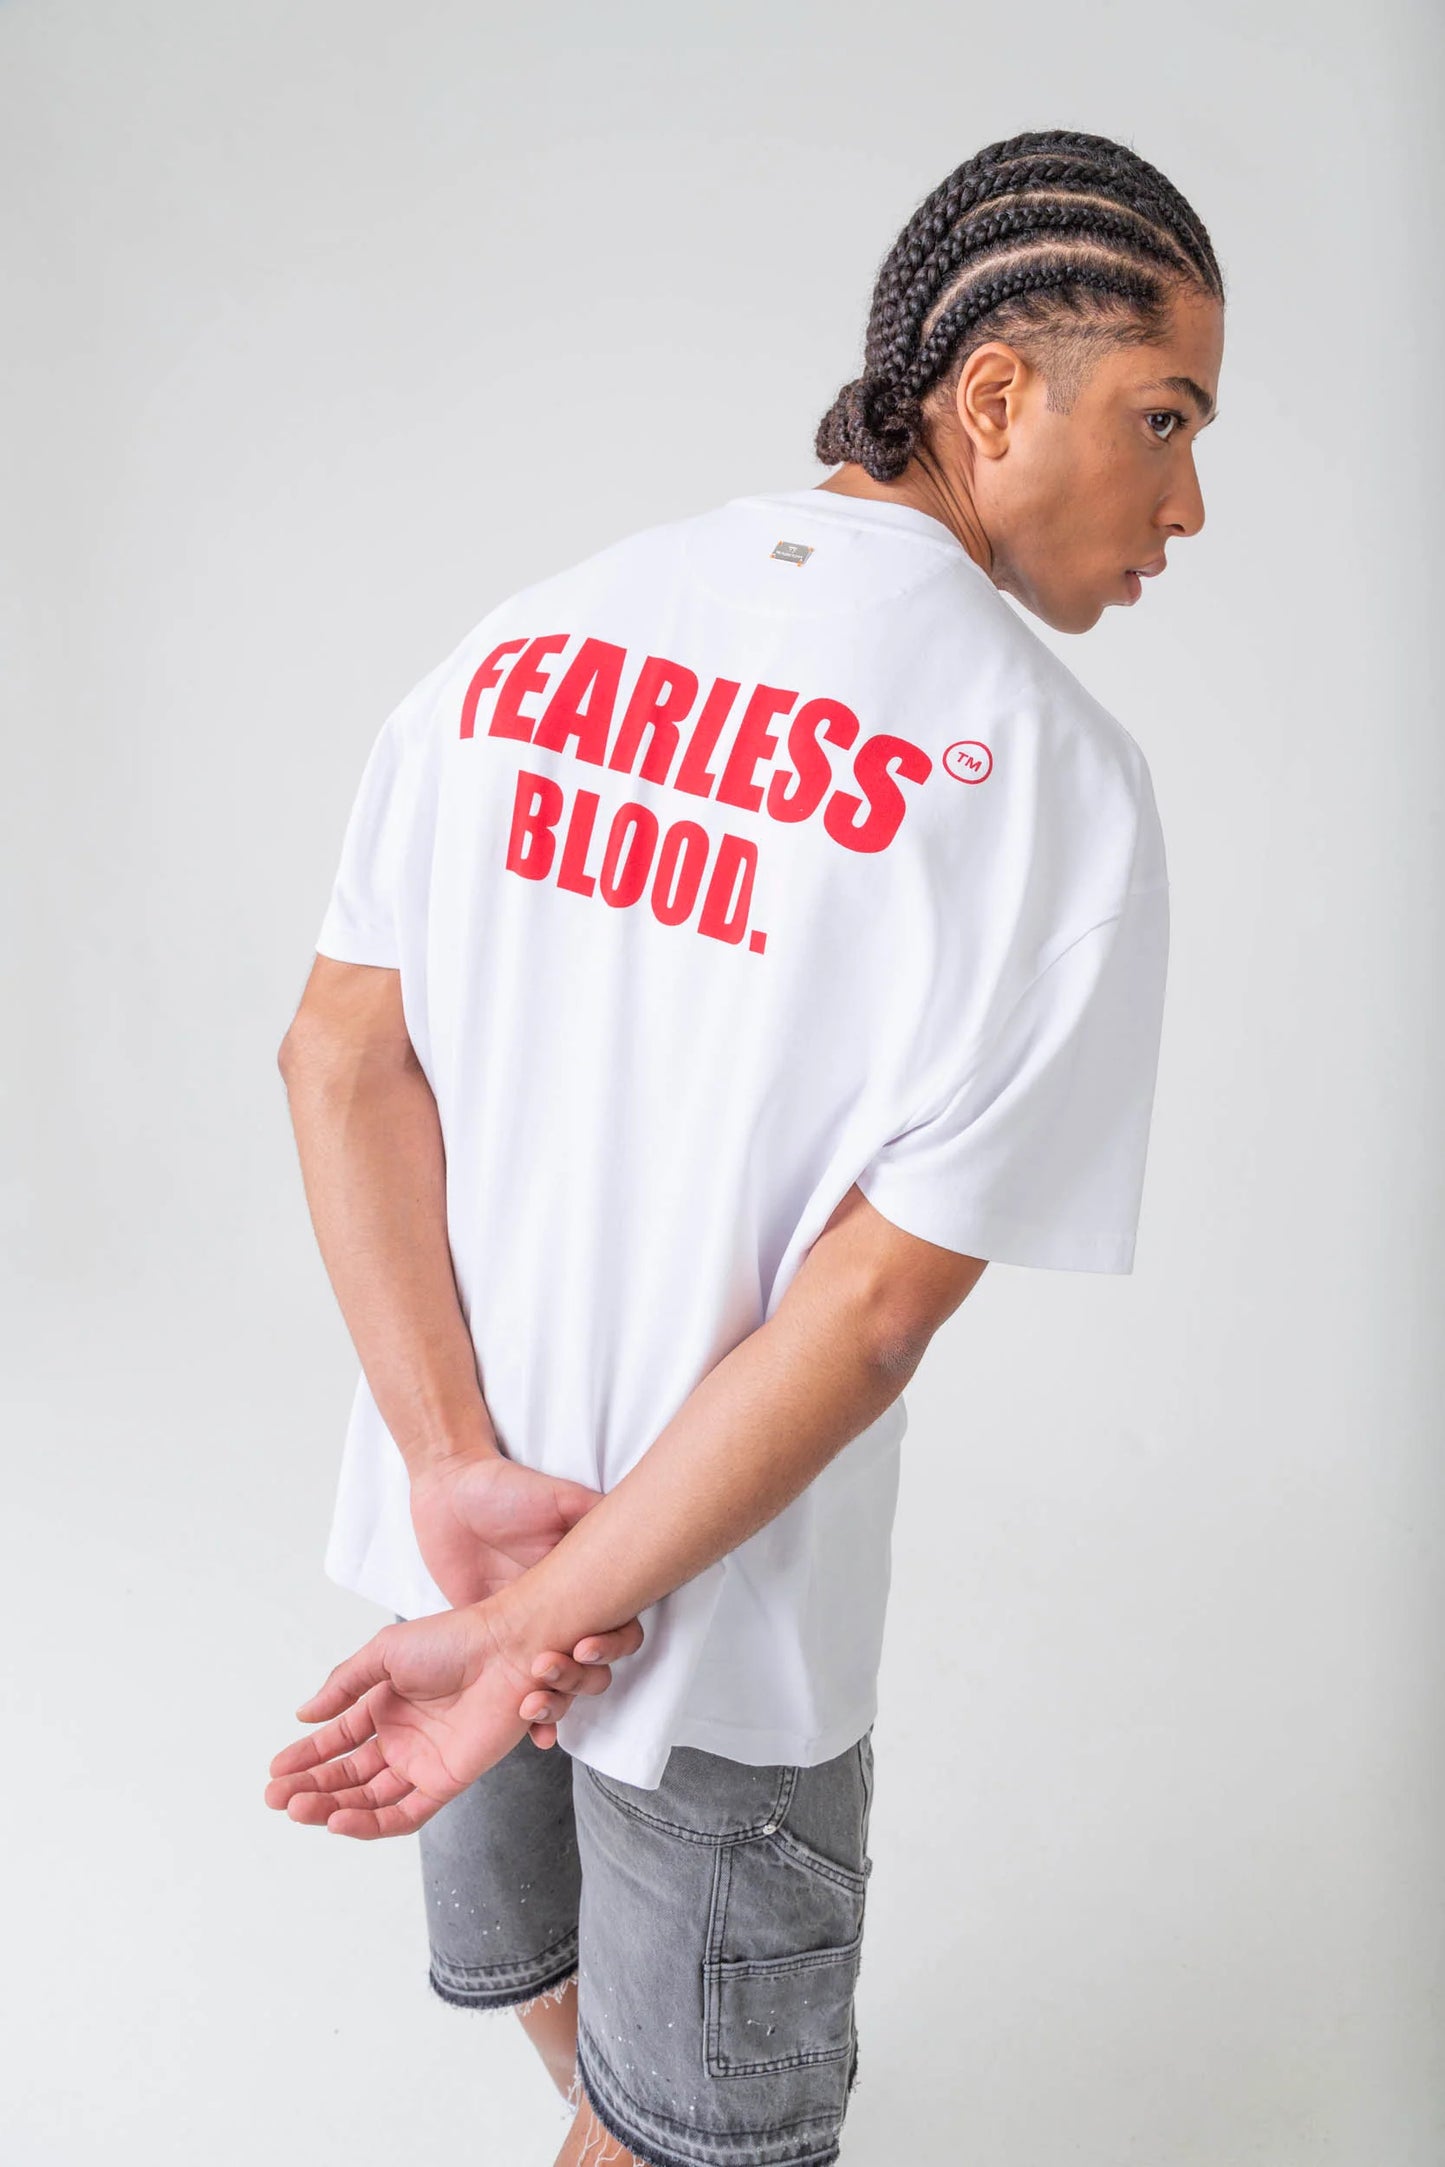 Fearless Blood FB-TEE-05